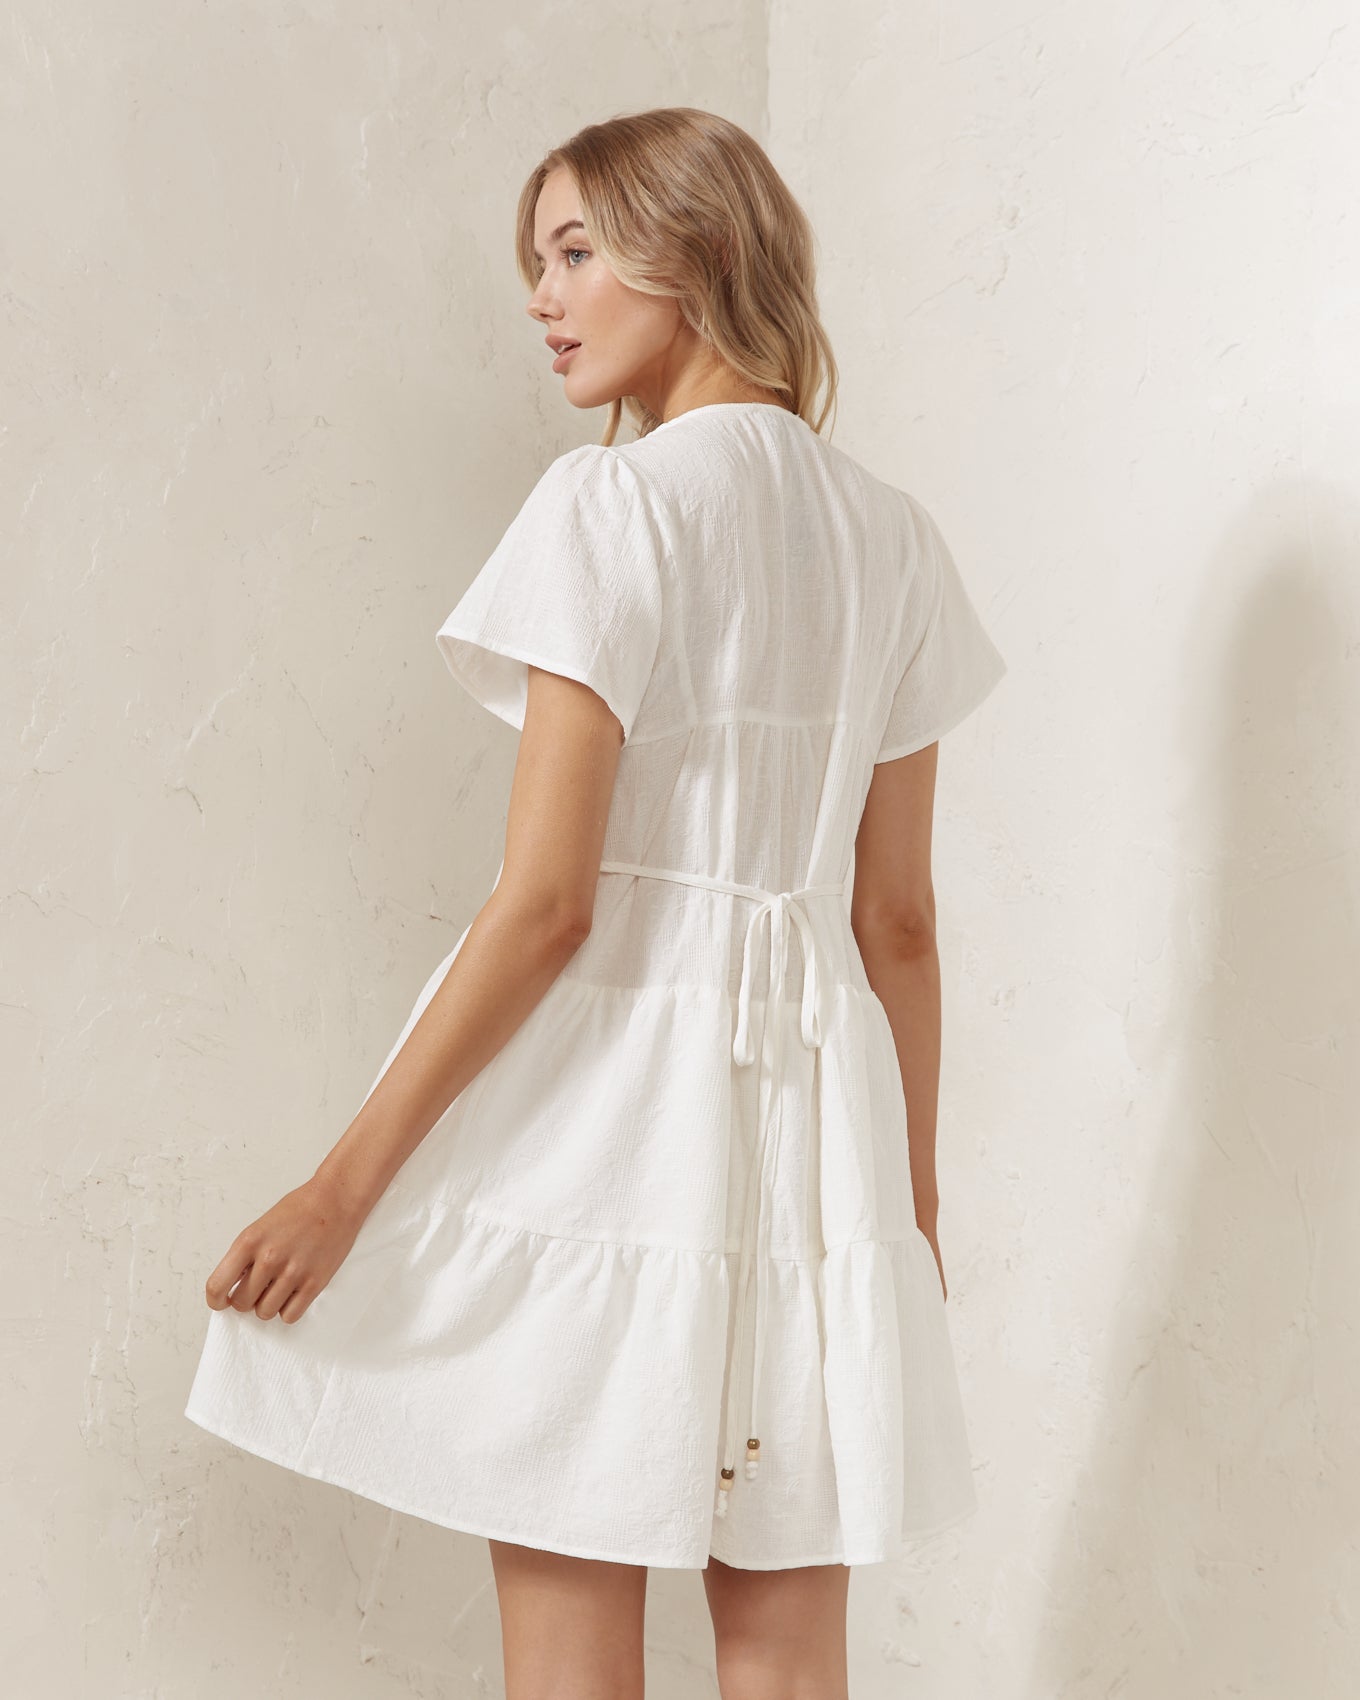 Whitlee White Lace Up Mini Dress